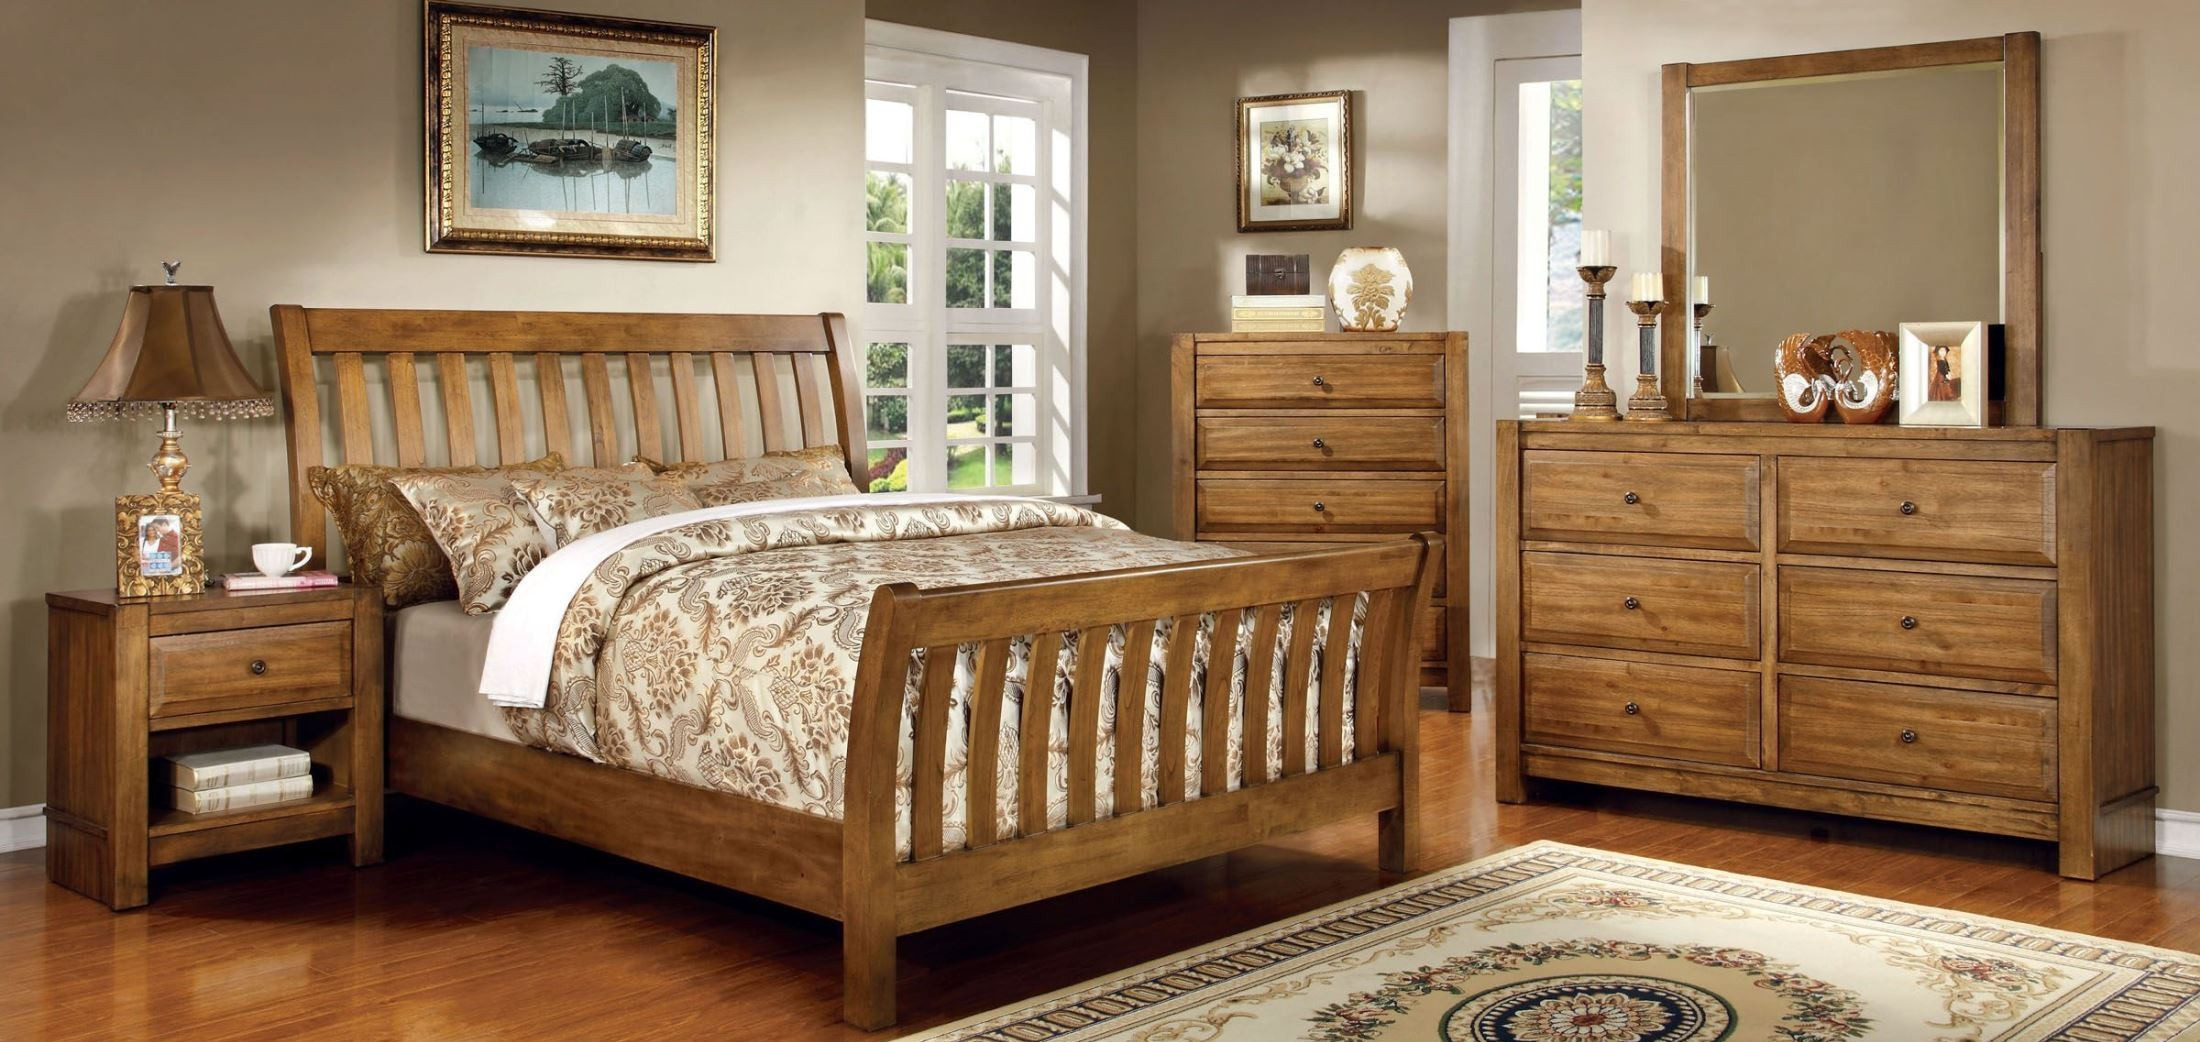 Rustic Bedroom Furniture
 Conrad Rustic Oak Sleigh Bedroom Set from Furniture of